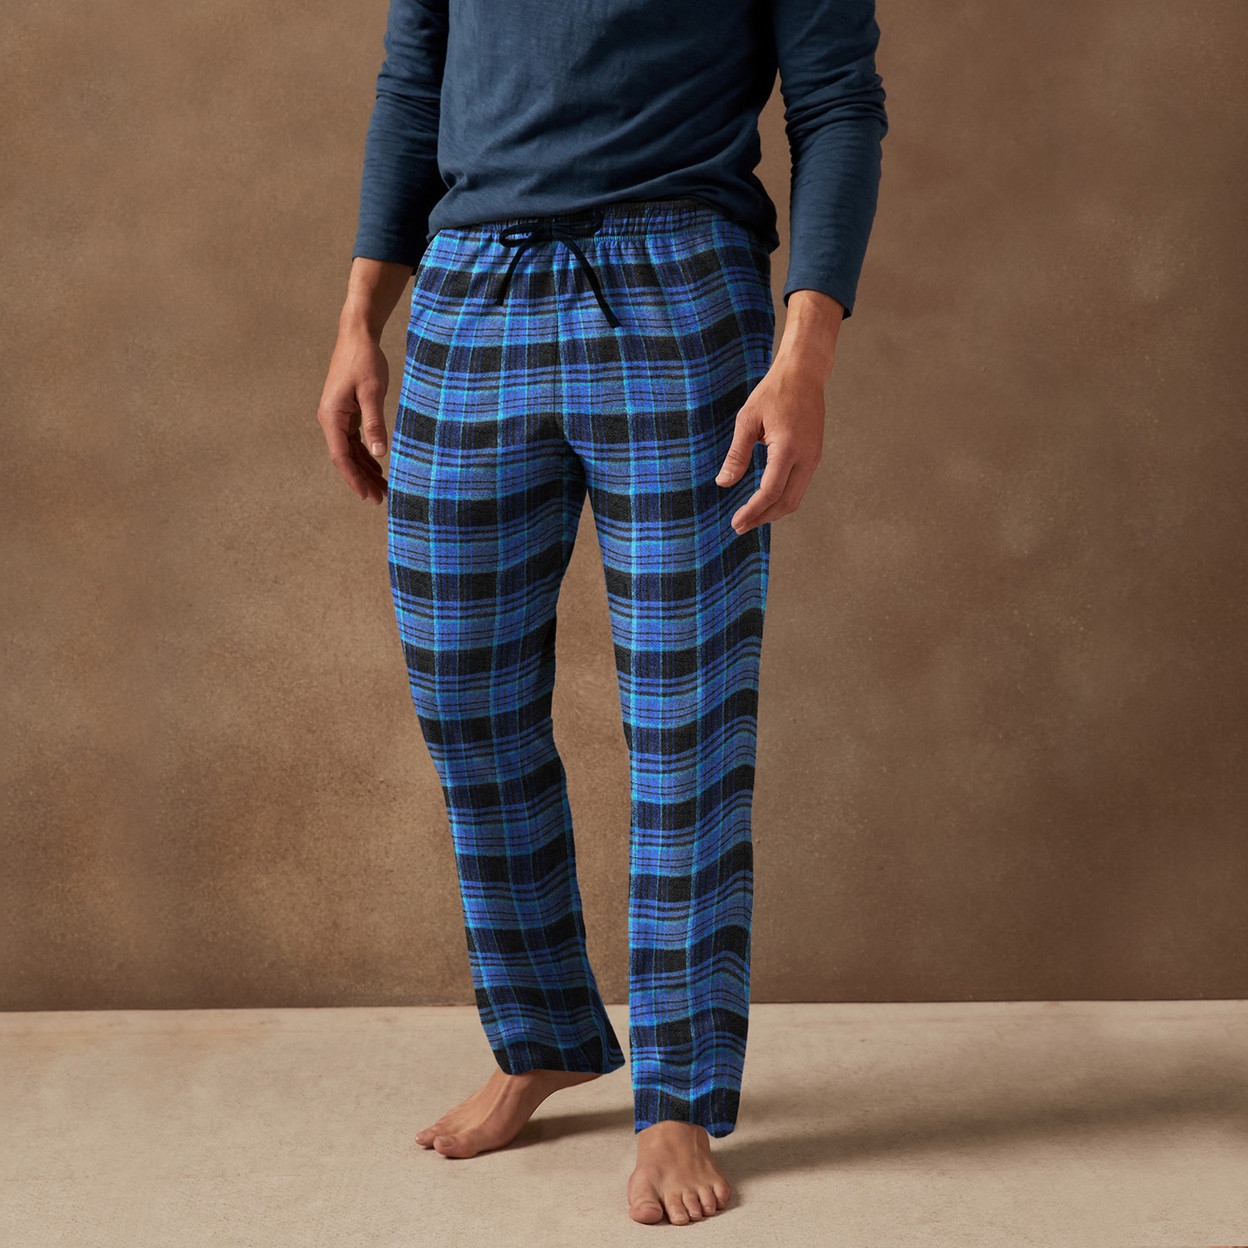 Men's Ultra-Soft Cozy Flannel Fleece Plaid Pajama Sleep Bottom Lounge Pants - Black, Small